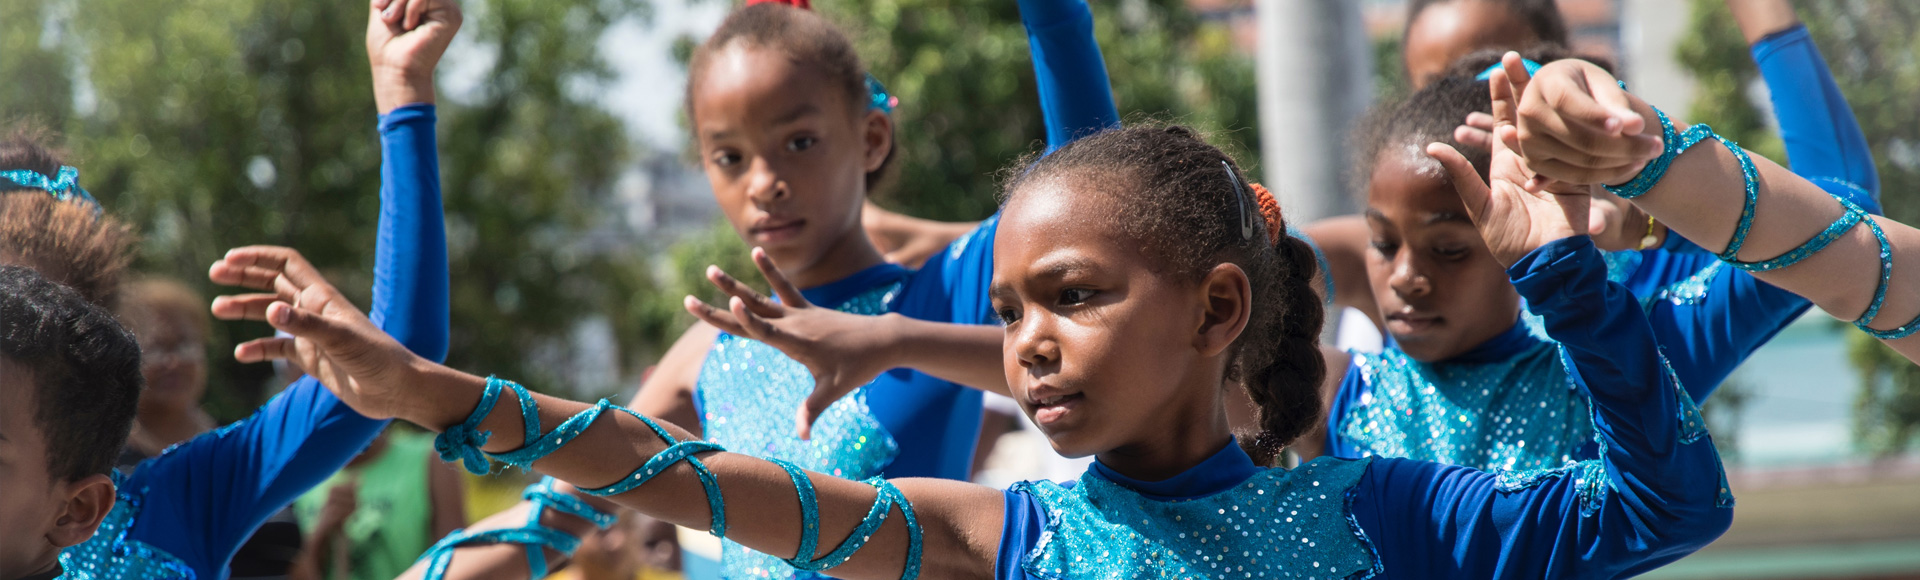 Tanzende Mädchen in Kuba